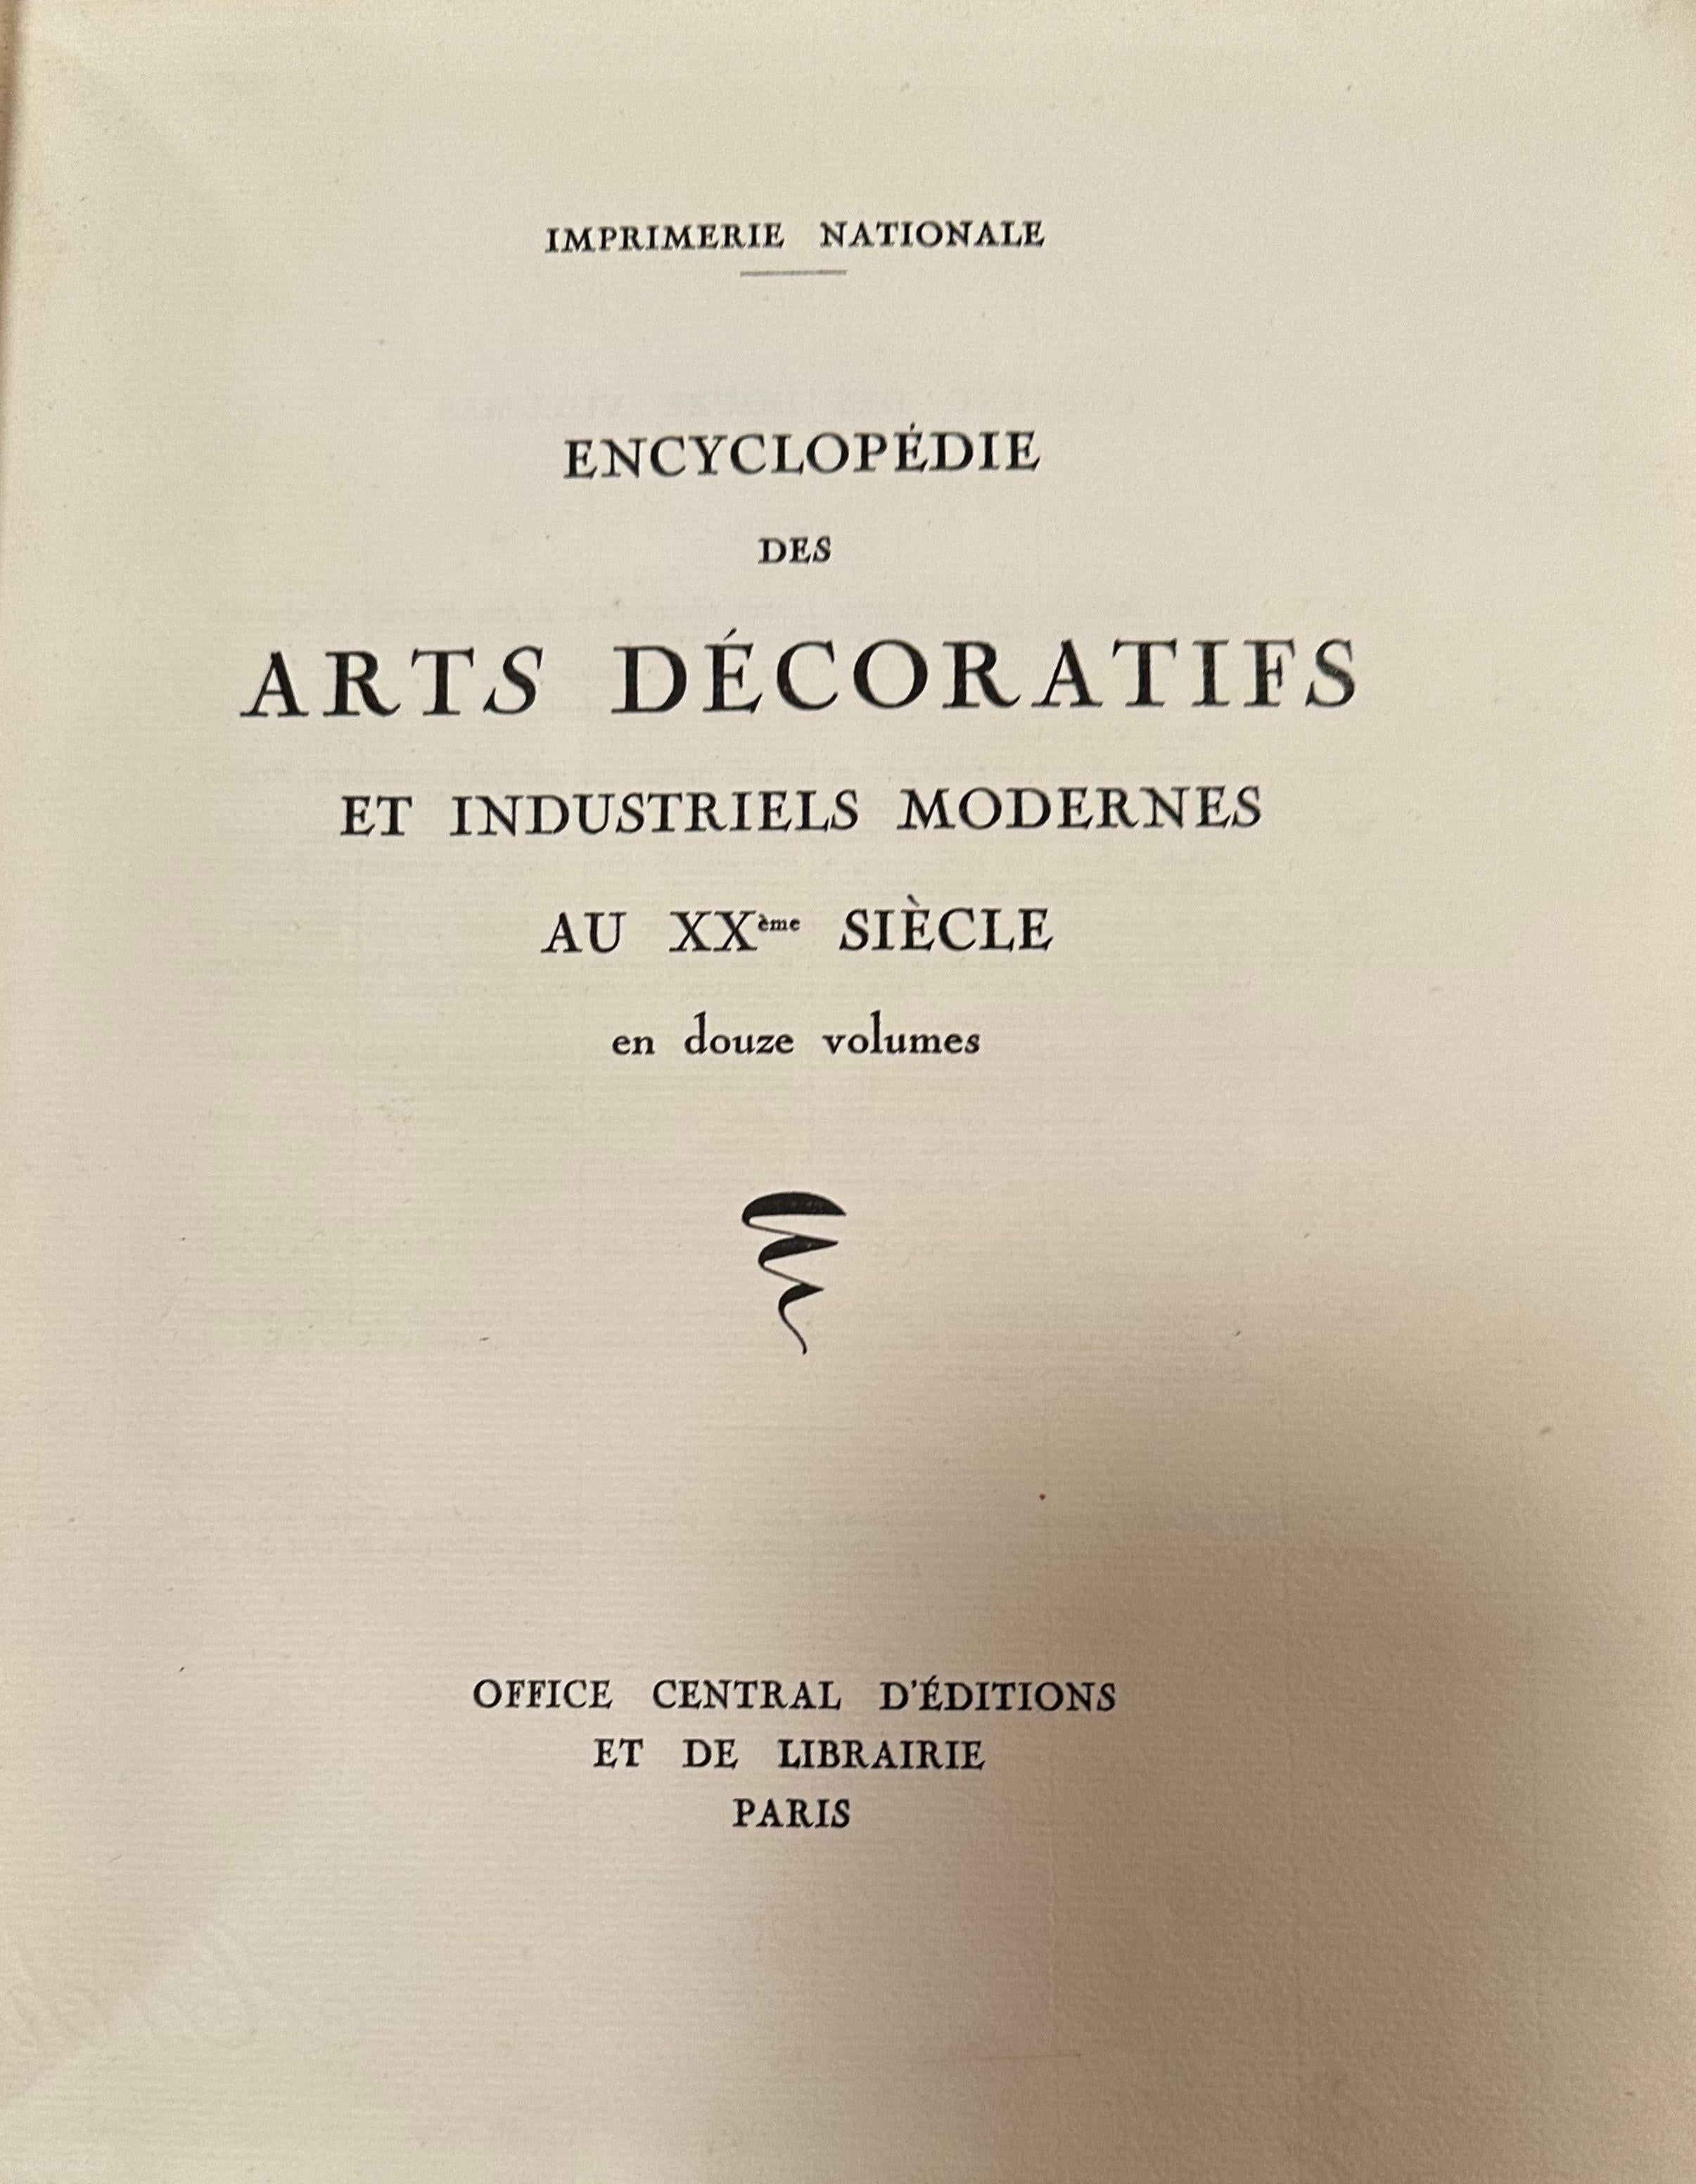 Arts Decoratifs Et Industriels Modernes Encyclopedie, 12 Books, 1925 Art Deco  In Good Condition For Sale In Oakland, CA